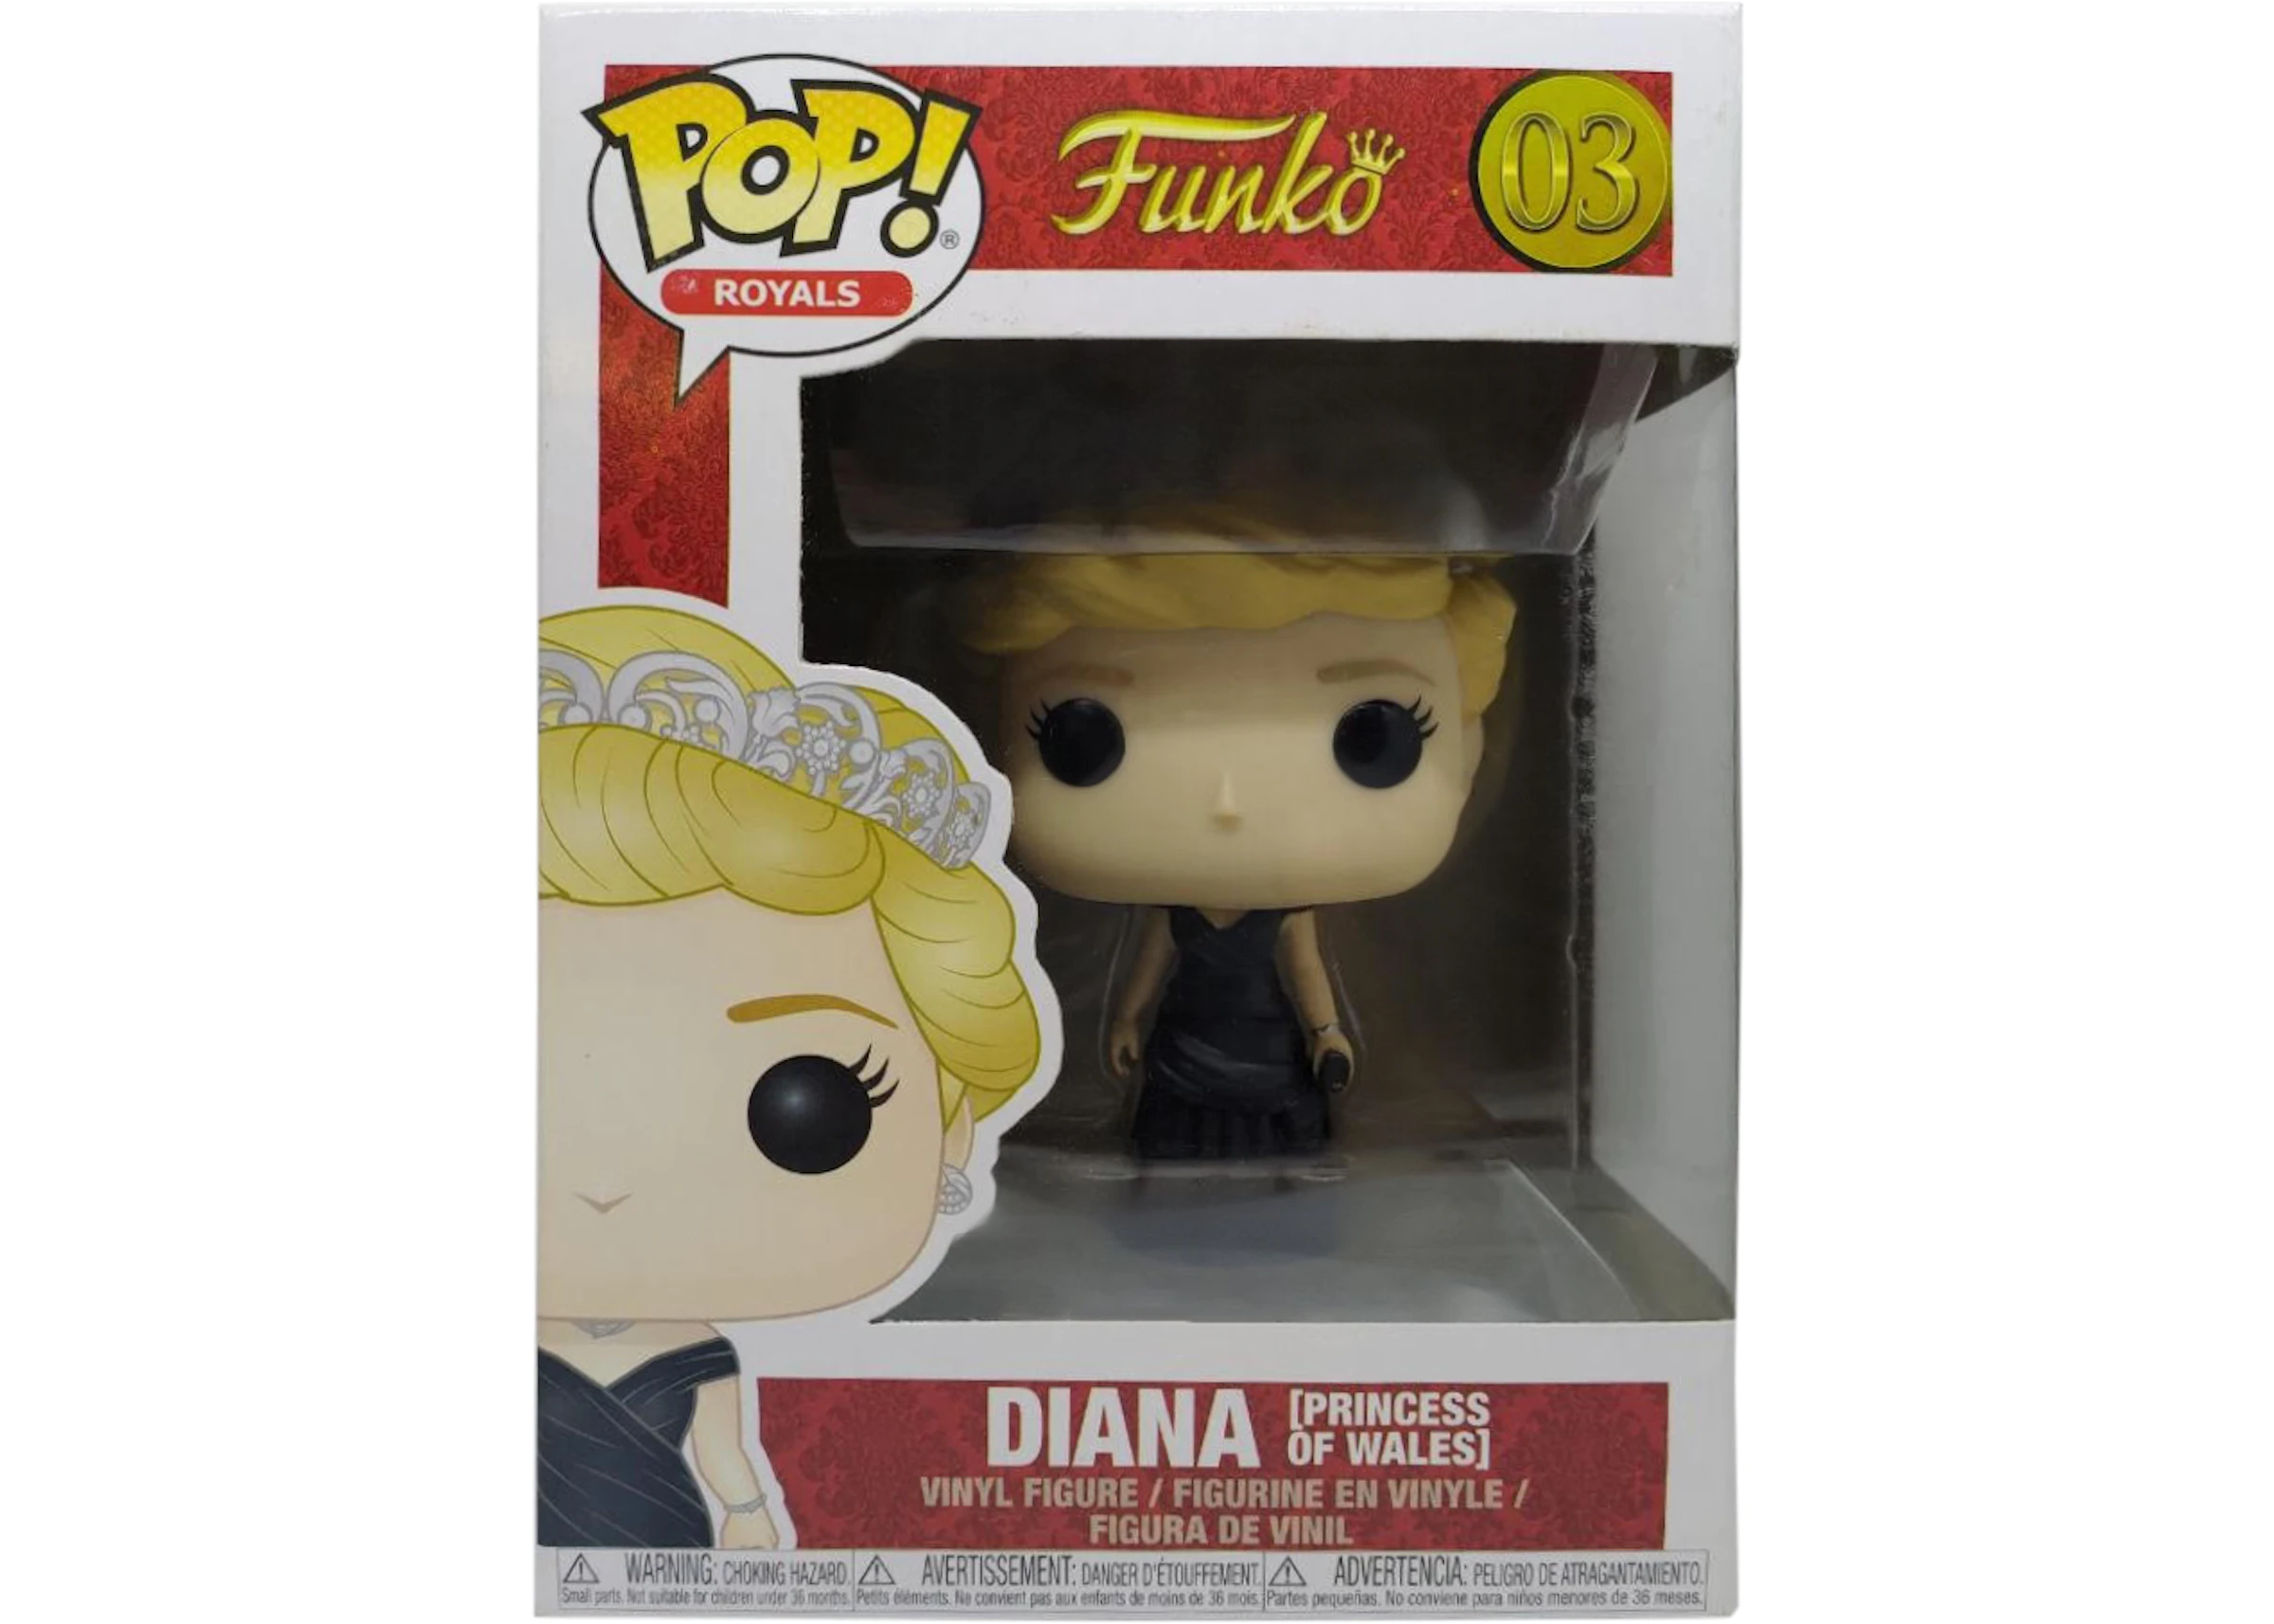 Funko Pop! Royals Diana Princess of Wales Figure #03 - US